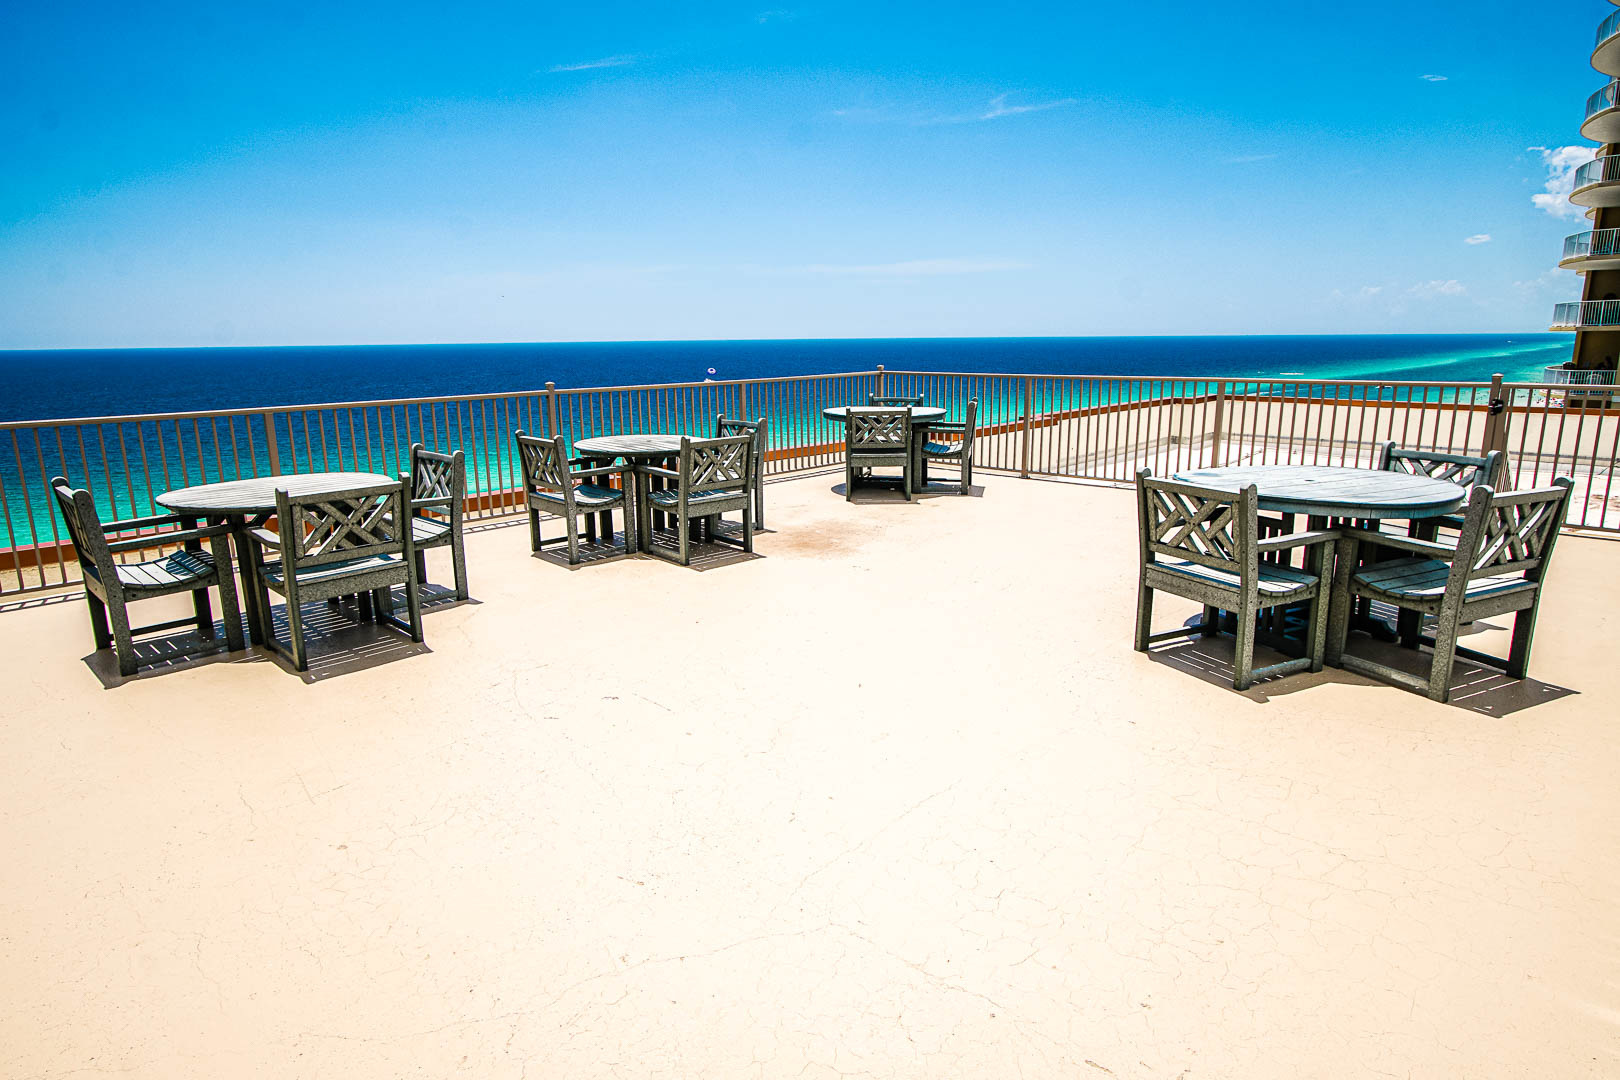 A spacious patio facing the beach at VRI's Landmark Holiday Beach Resort in Panama City, Florida.